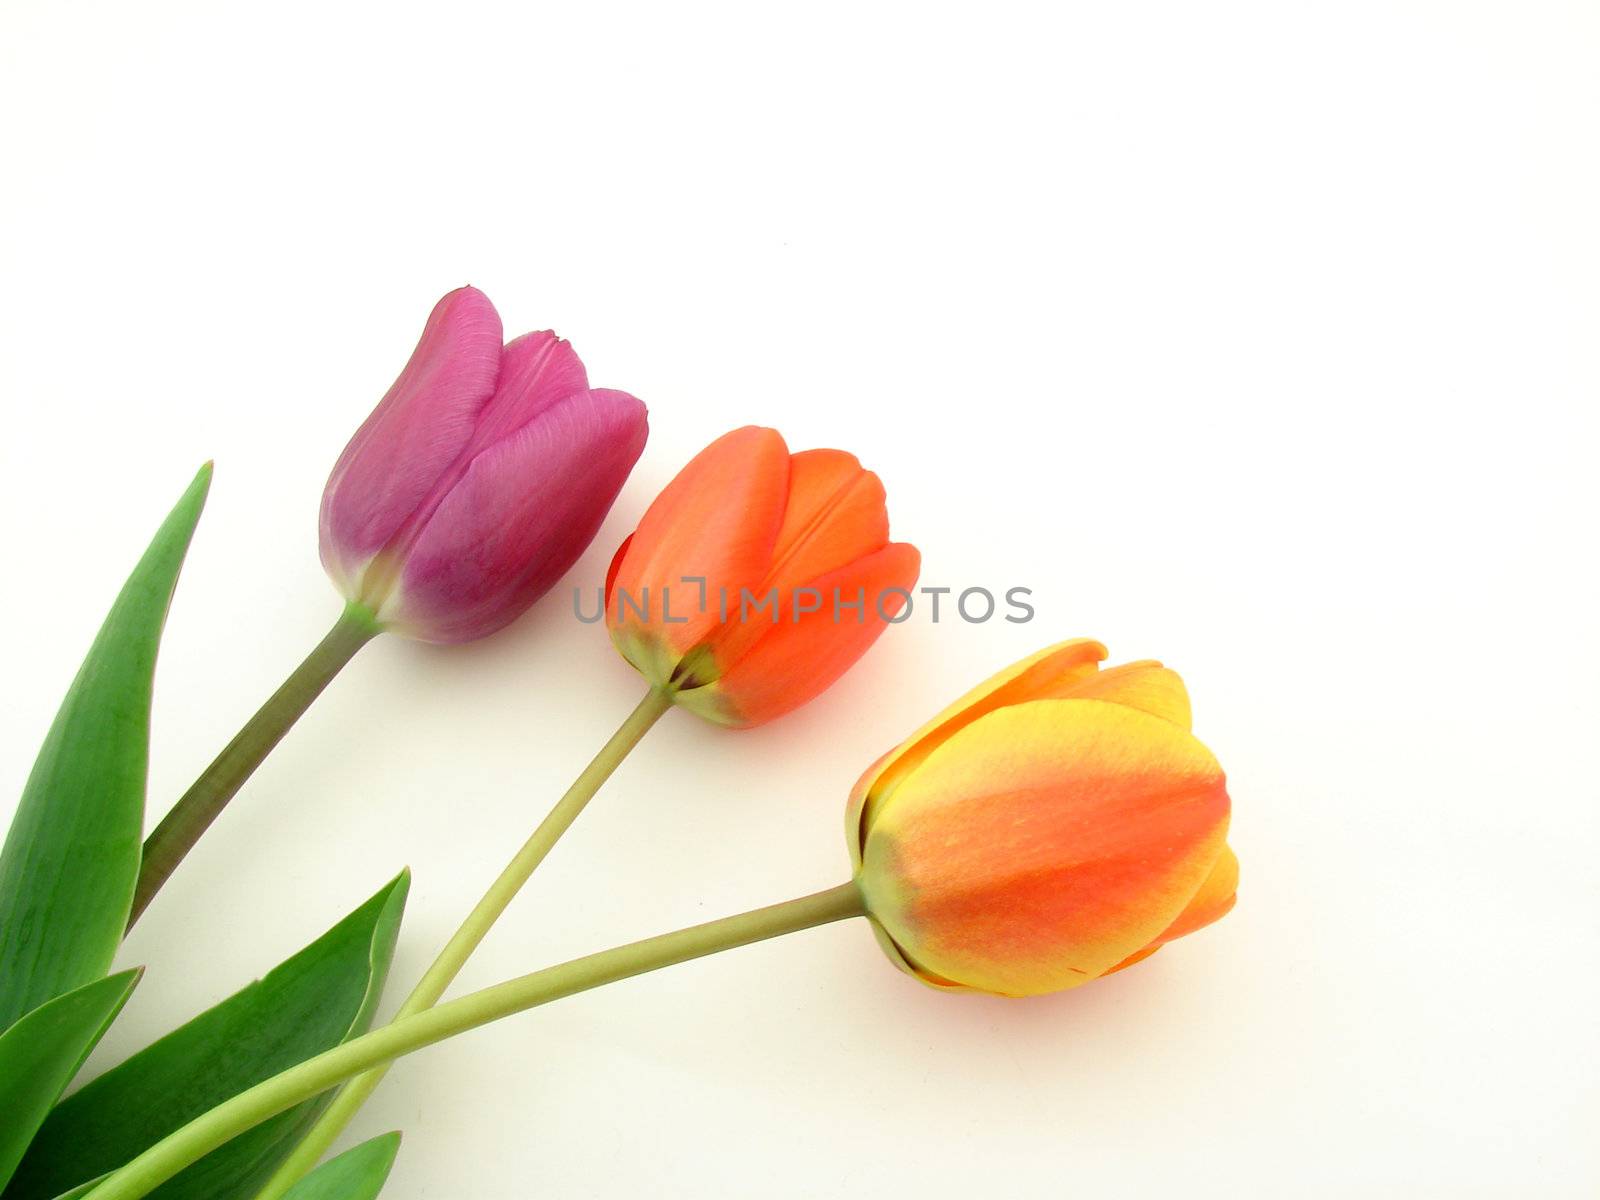 Tulip flowers by morchella